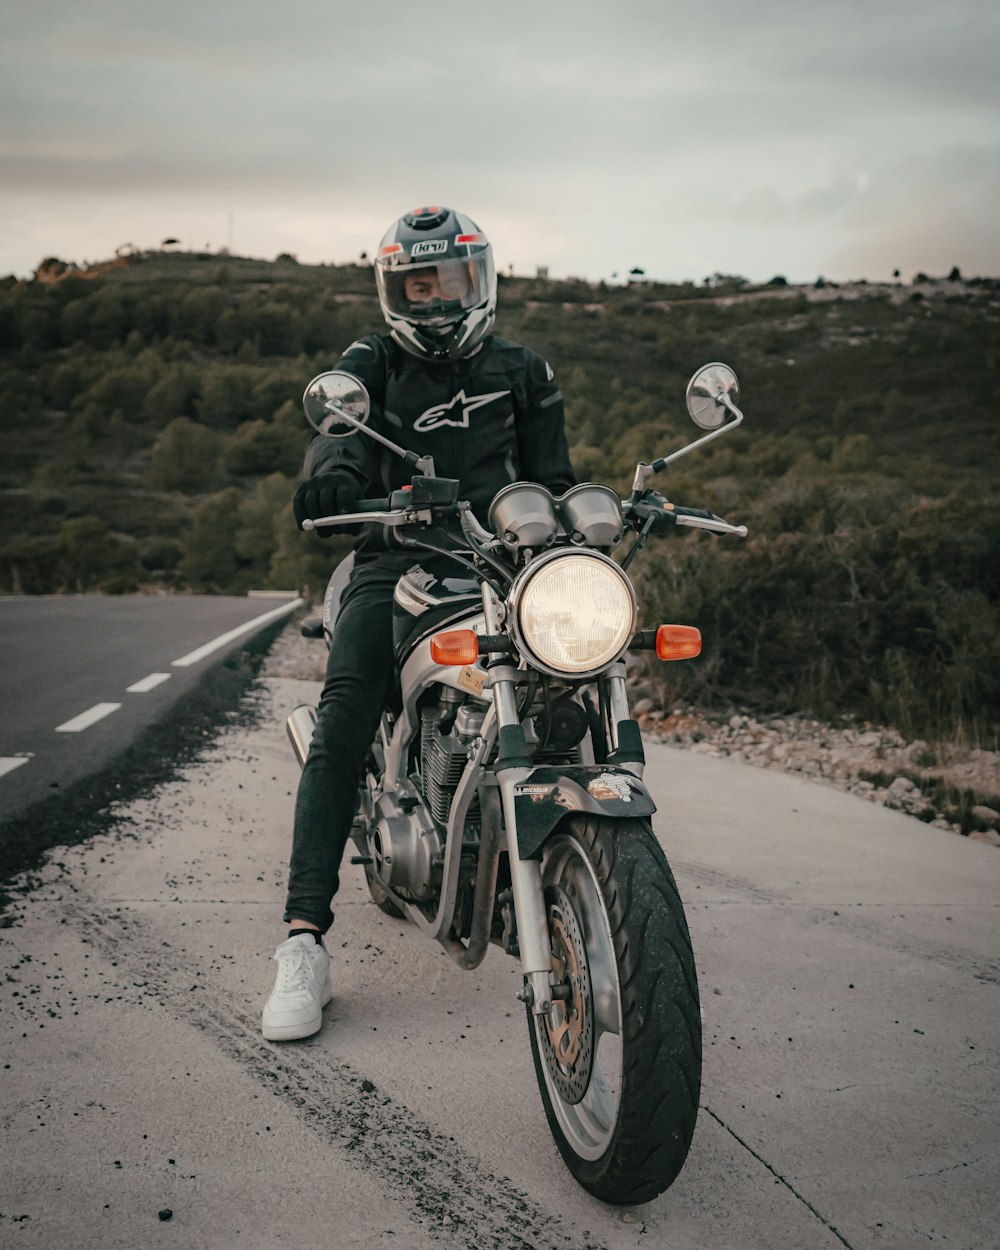 man wearing black and white Alpinestar jacket riding motorcycle near road